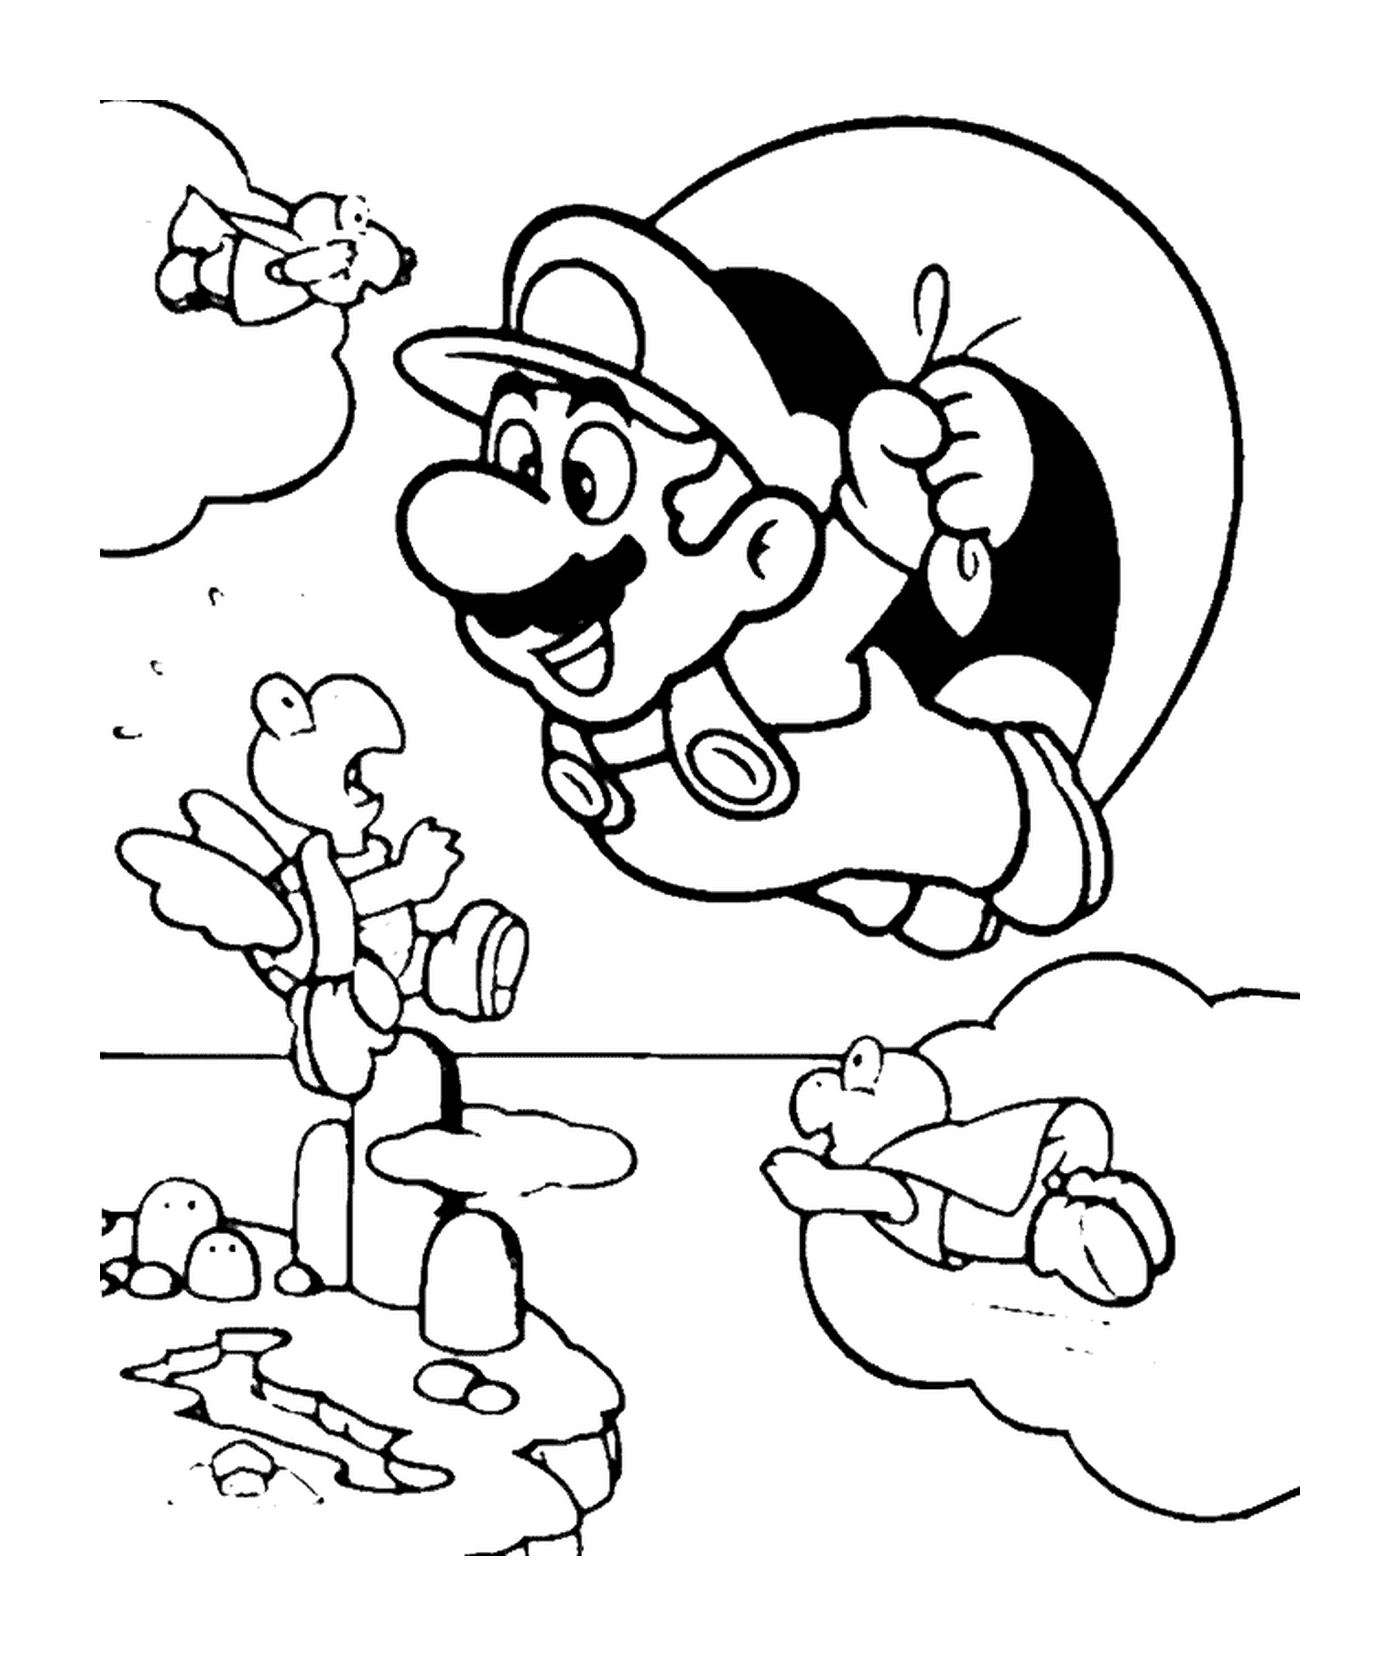  Mario flies with a parachute 